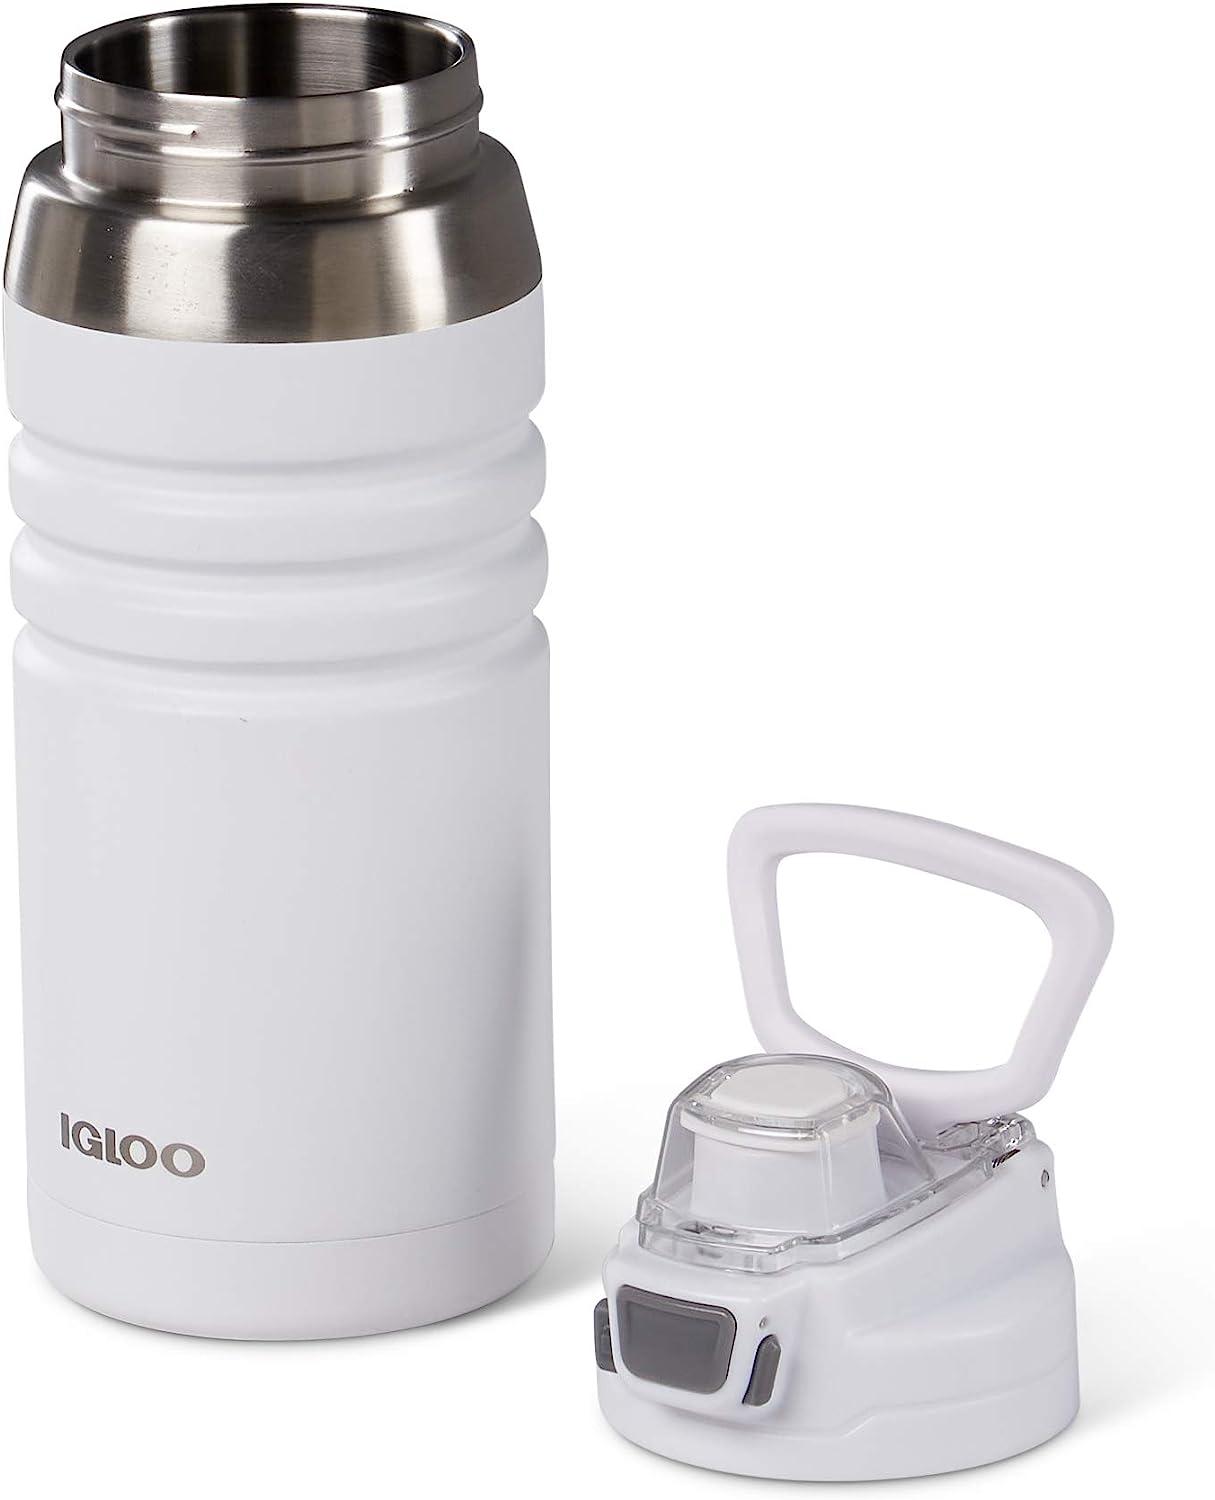 Igloo® 36 Oz. Vacuum Insulated Bottle - Custom Drinkware